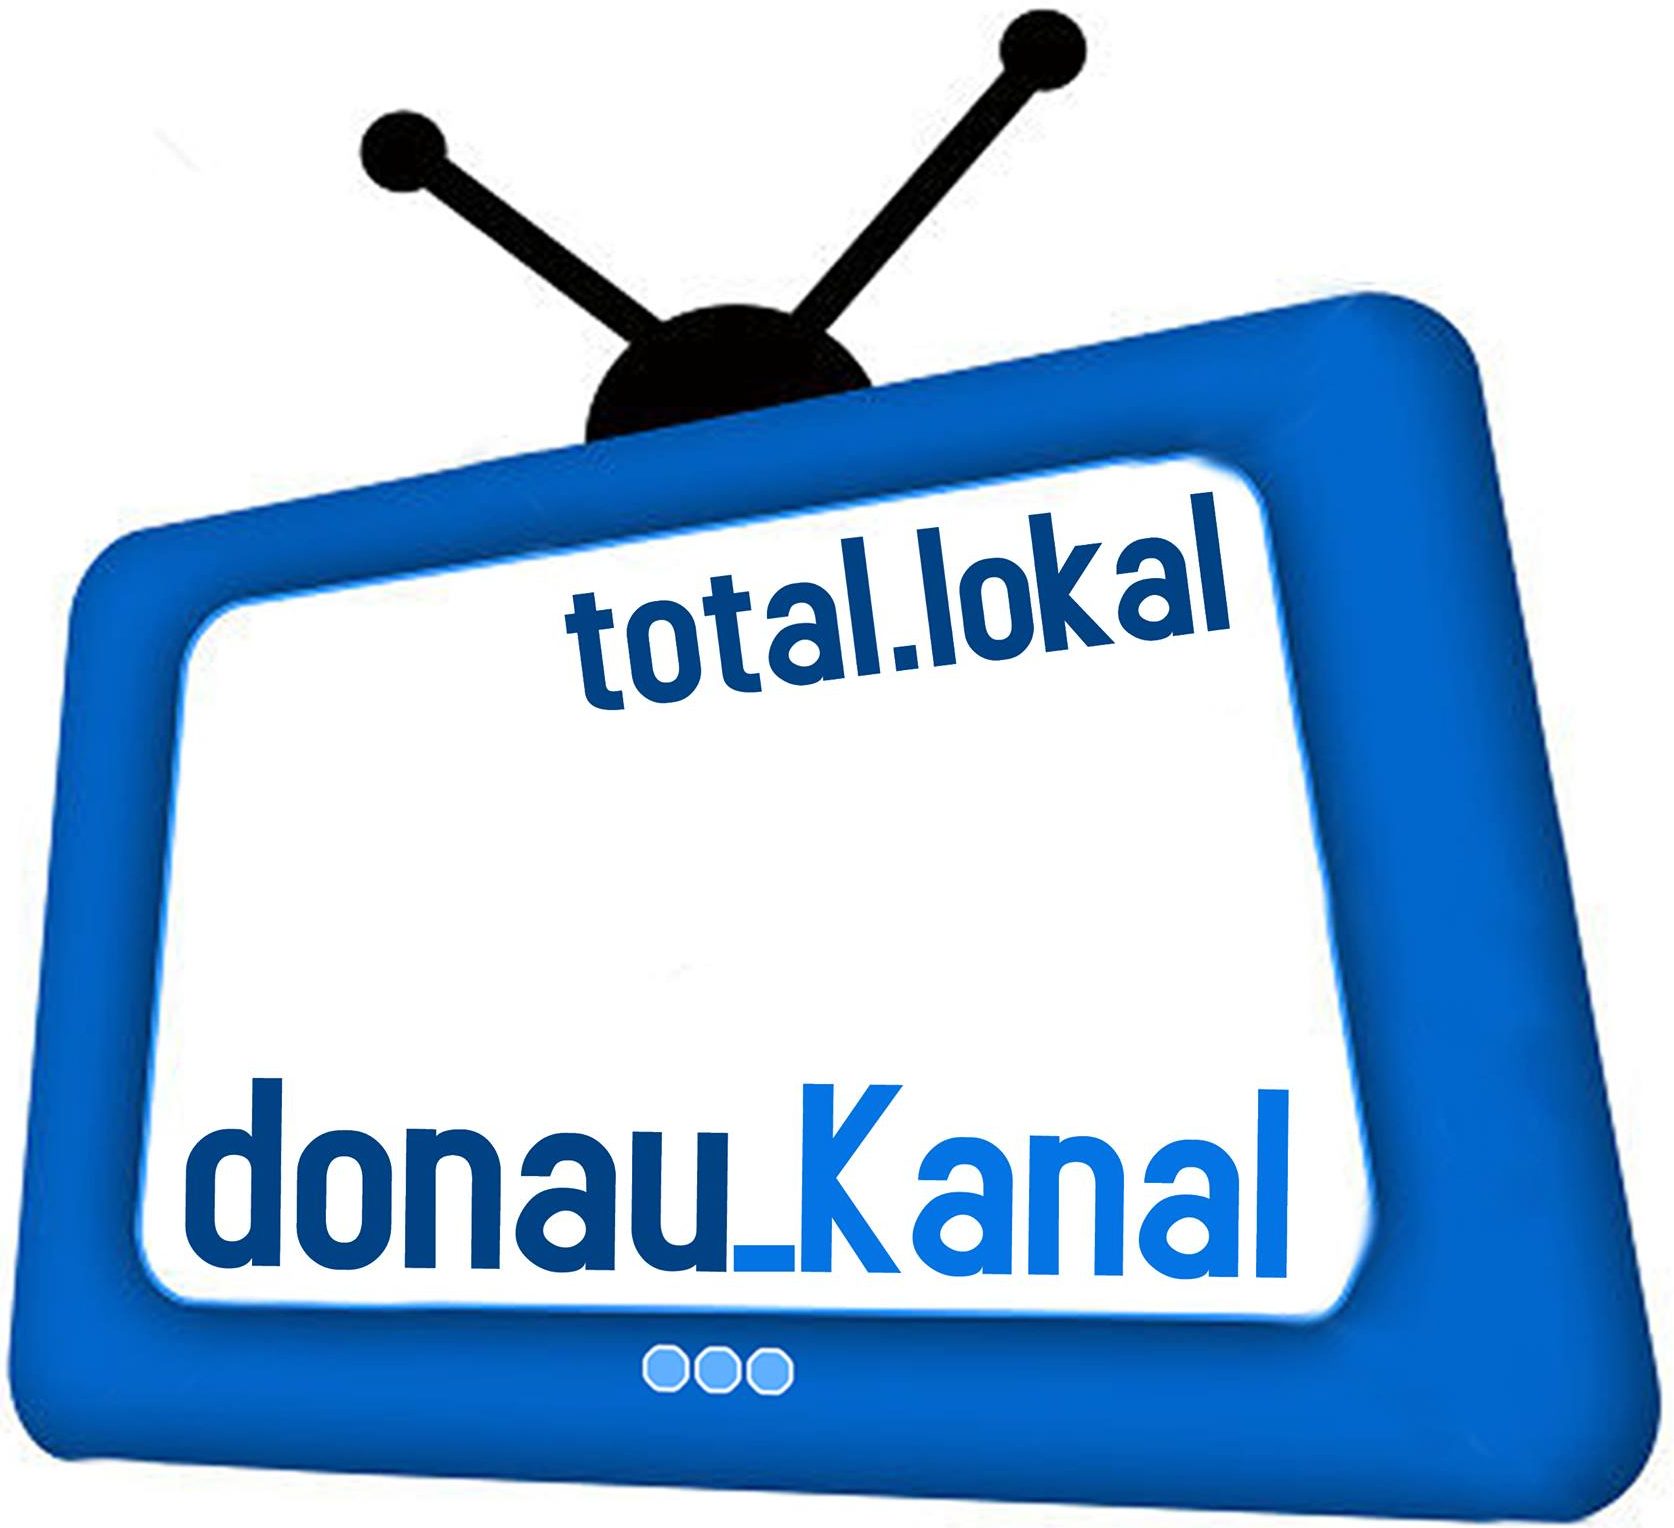 donau_Kanal TV | total.regional